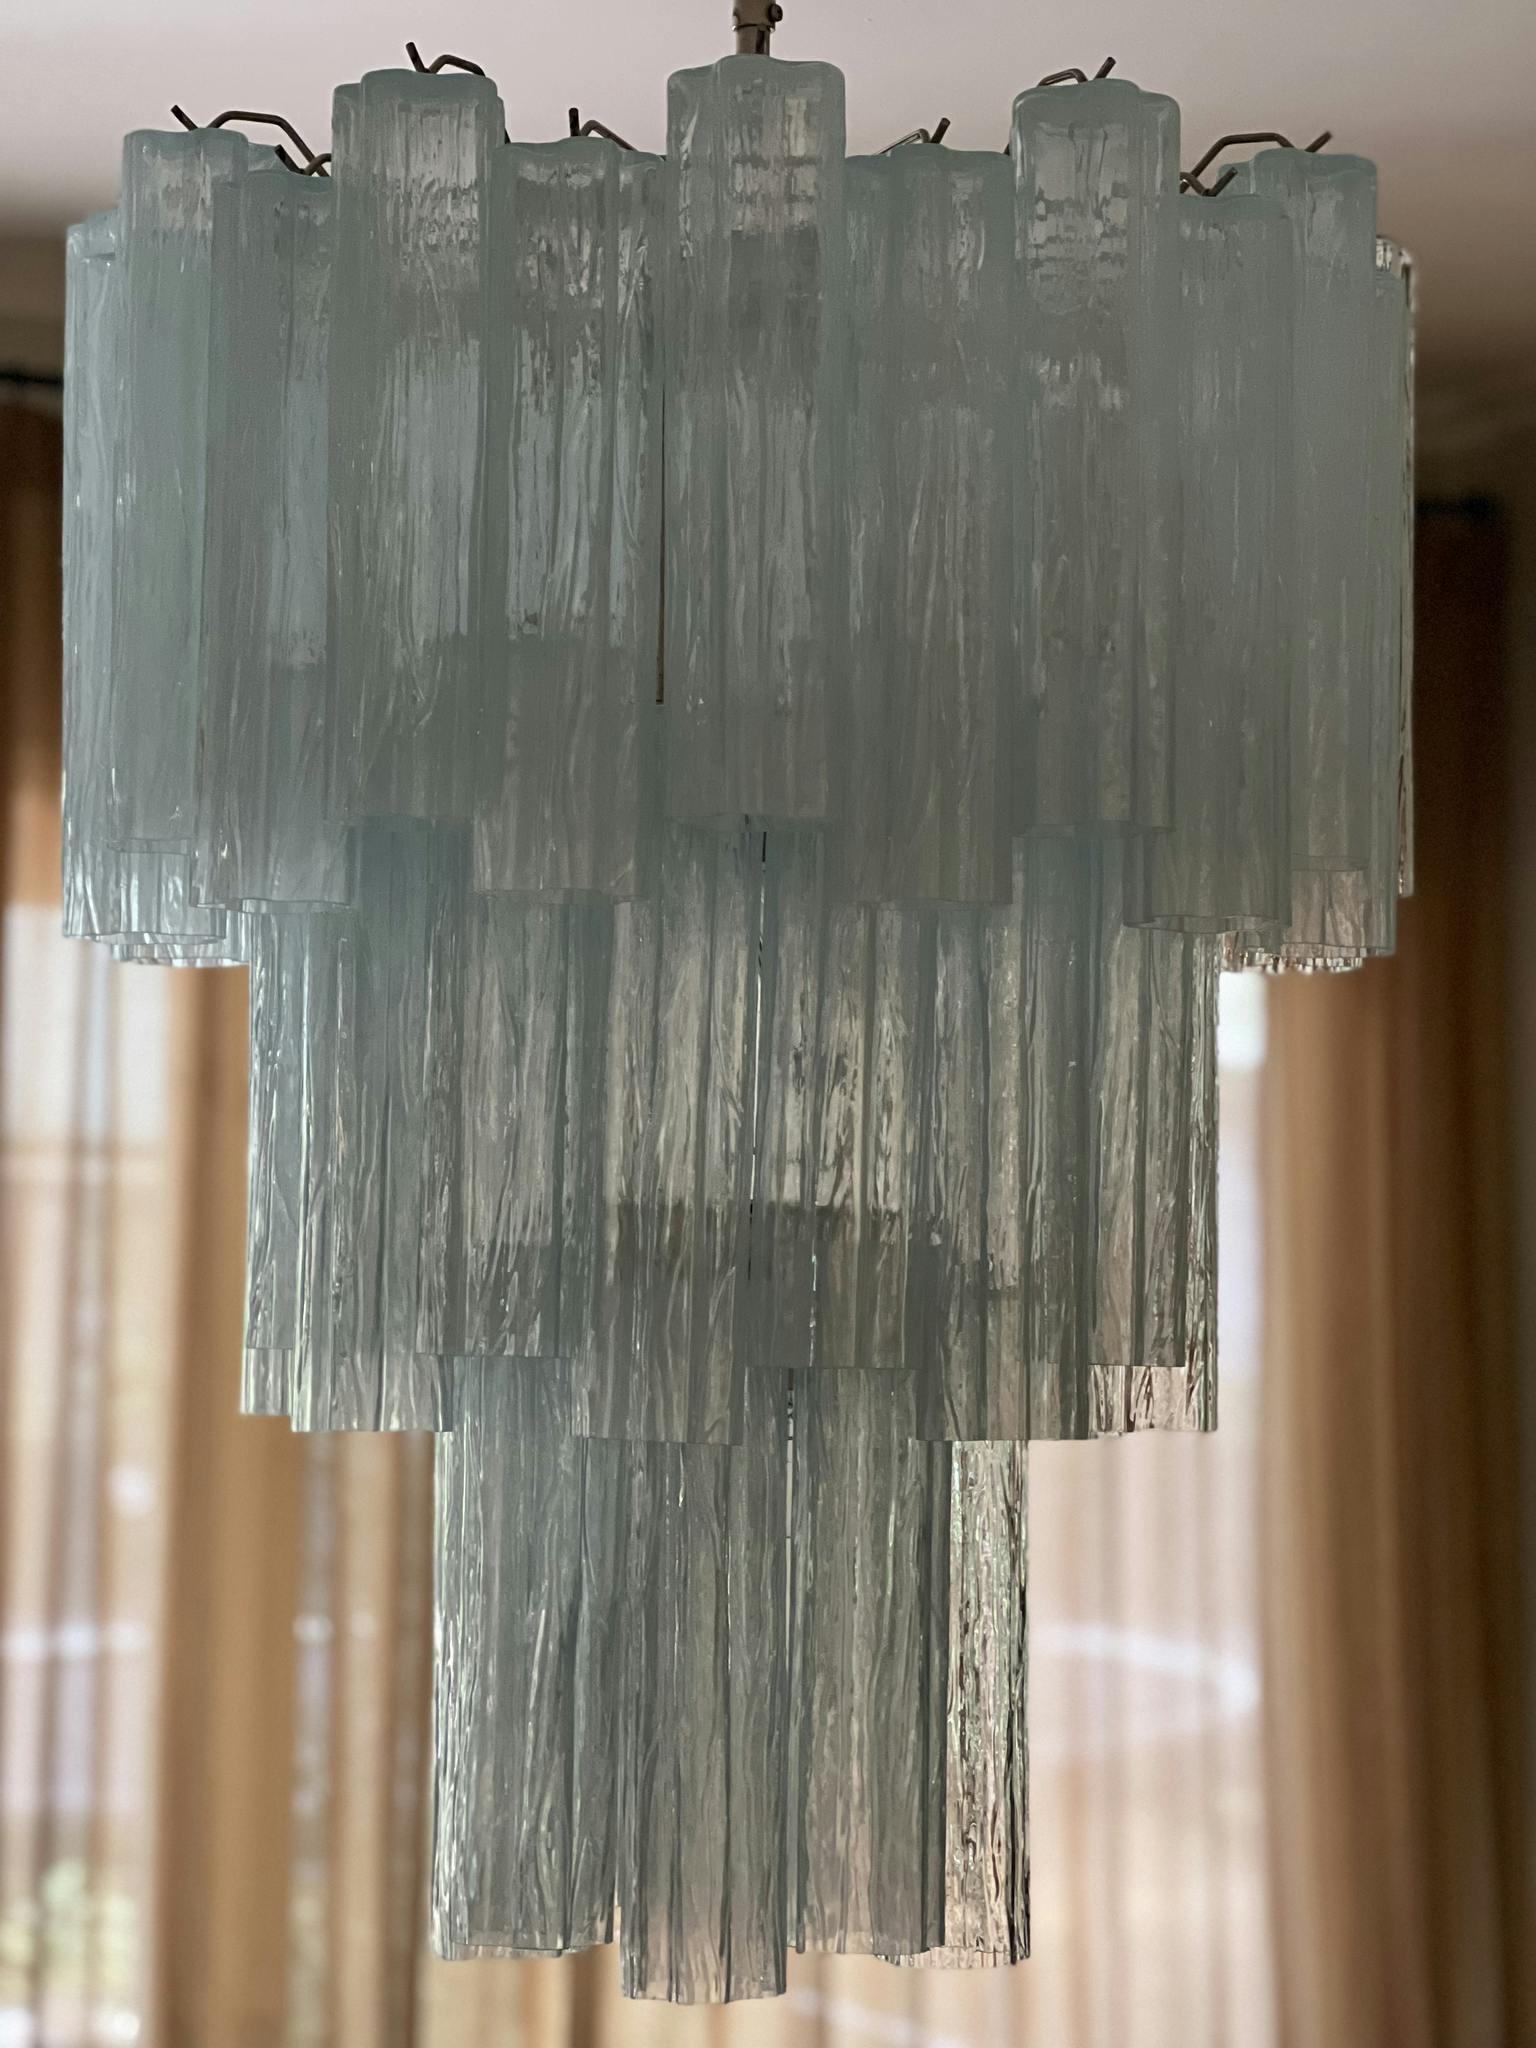 Ice Blue Murano Glass Chandelier 'Tubular'. XL.